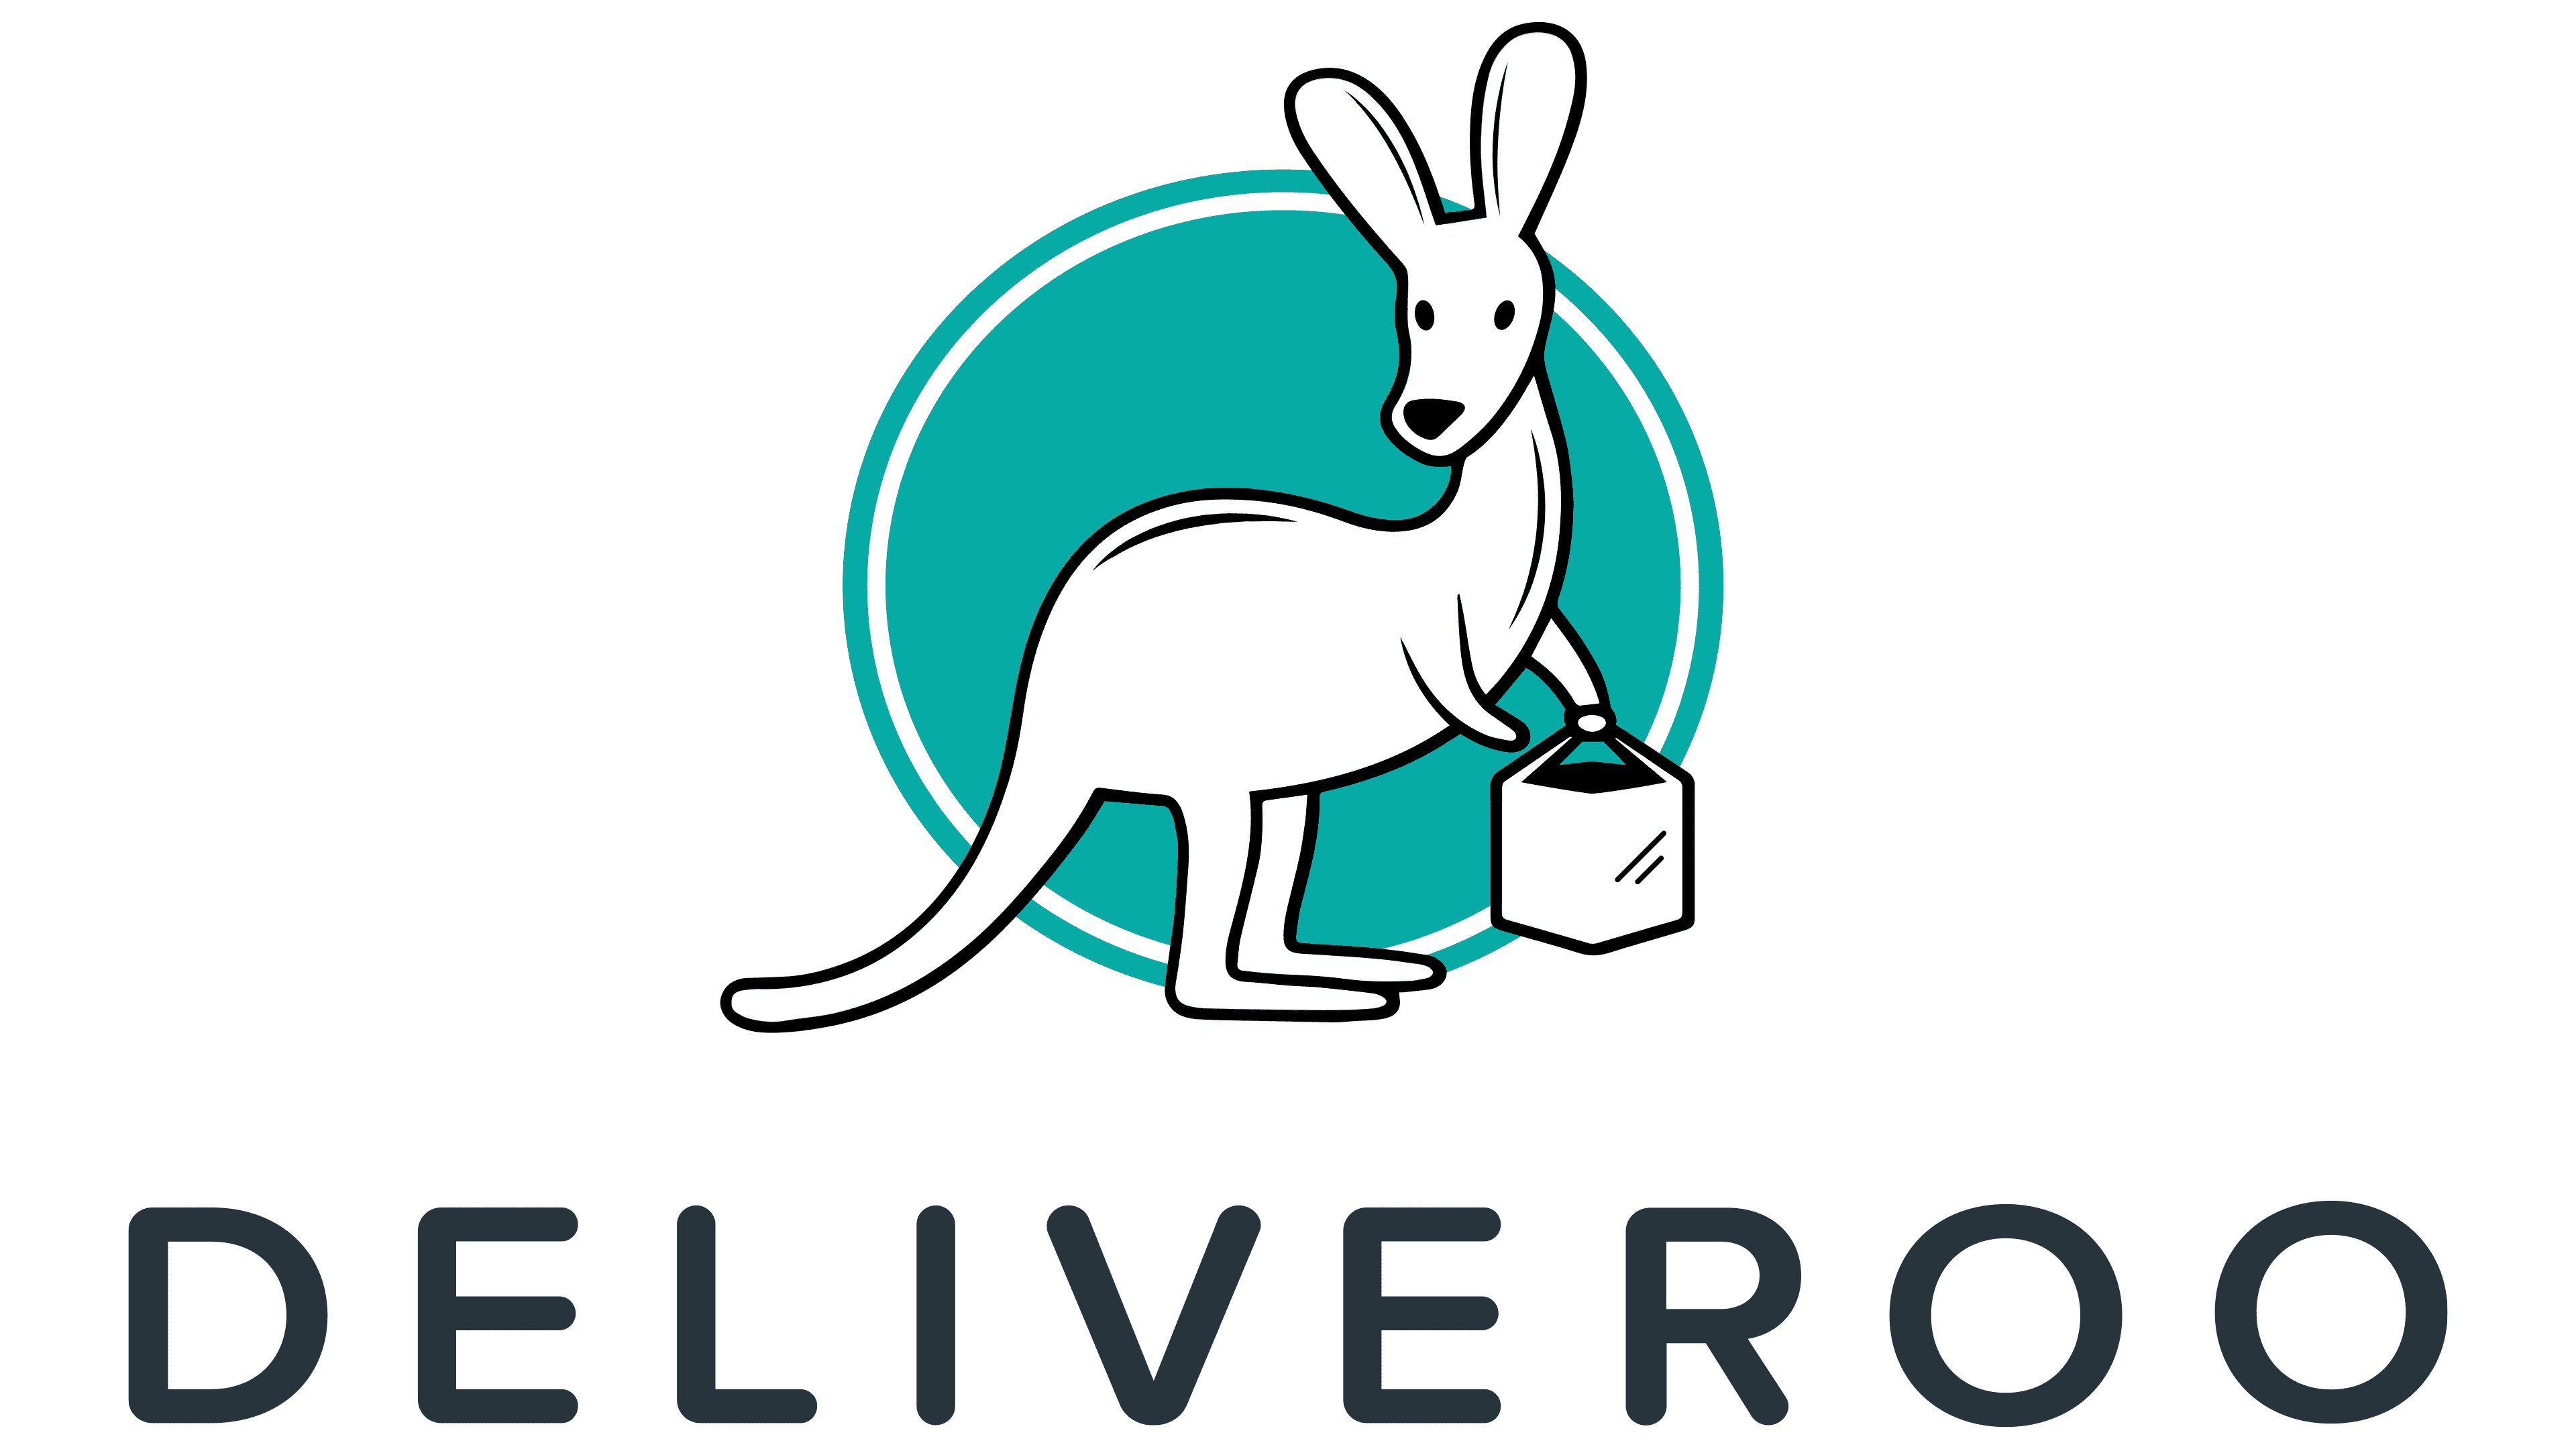 Most a Famous with Kangaroo Logos